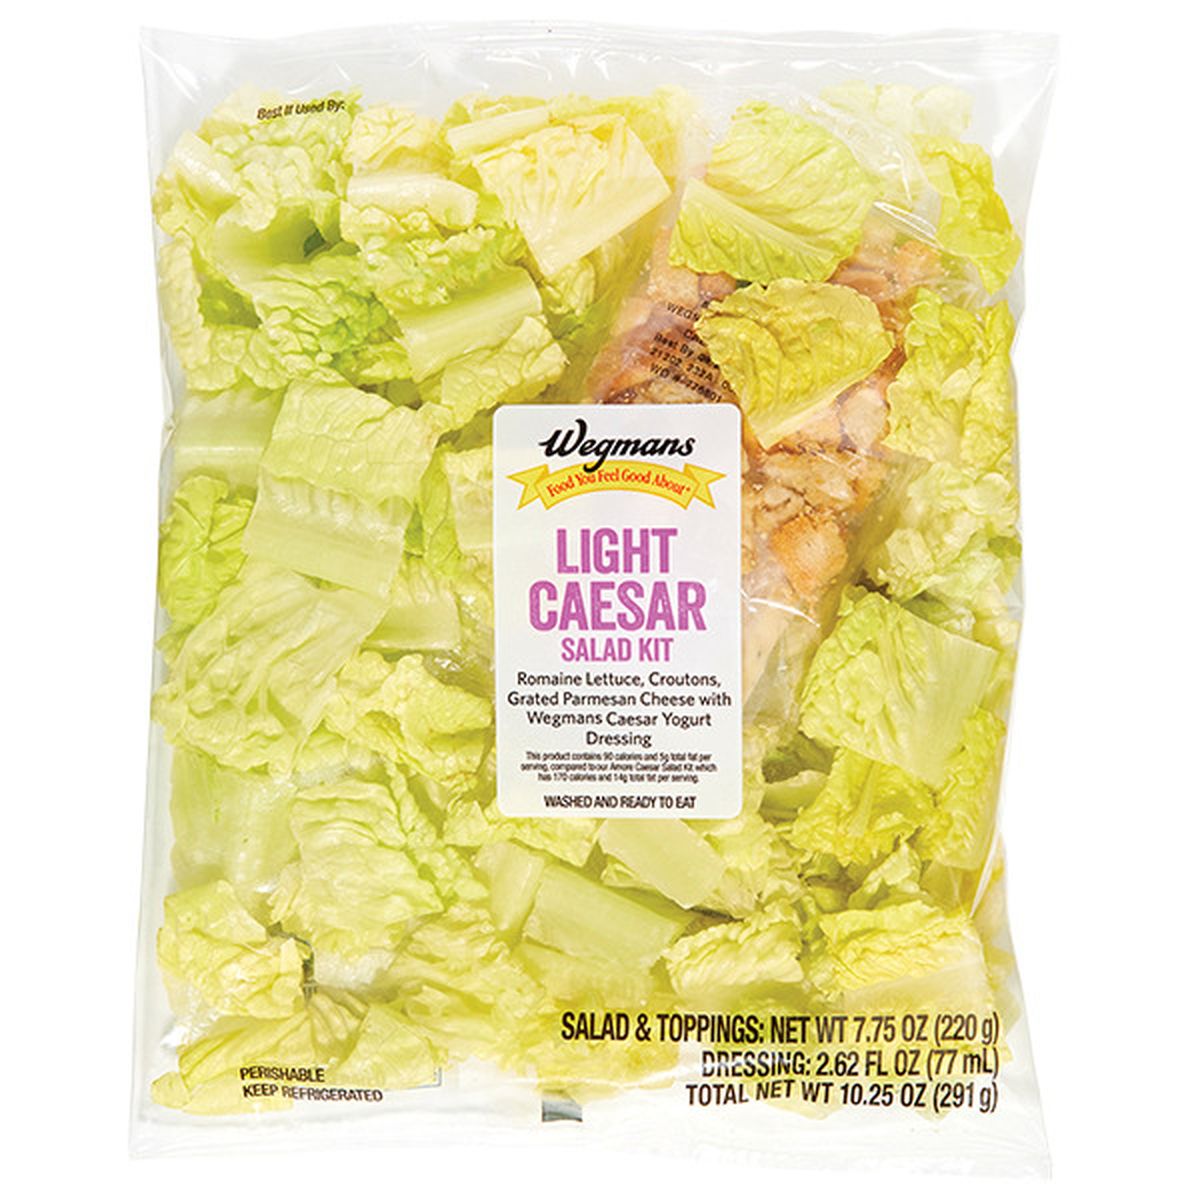 Calories in Wegmans Light Caesar Salad Kit